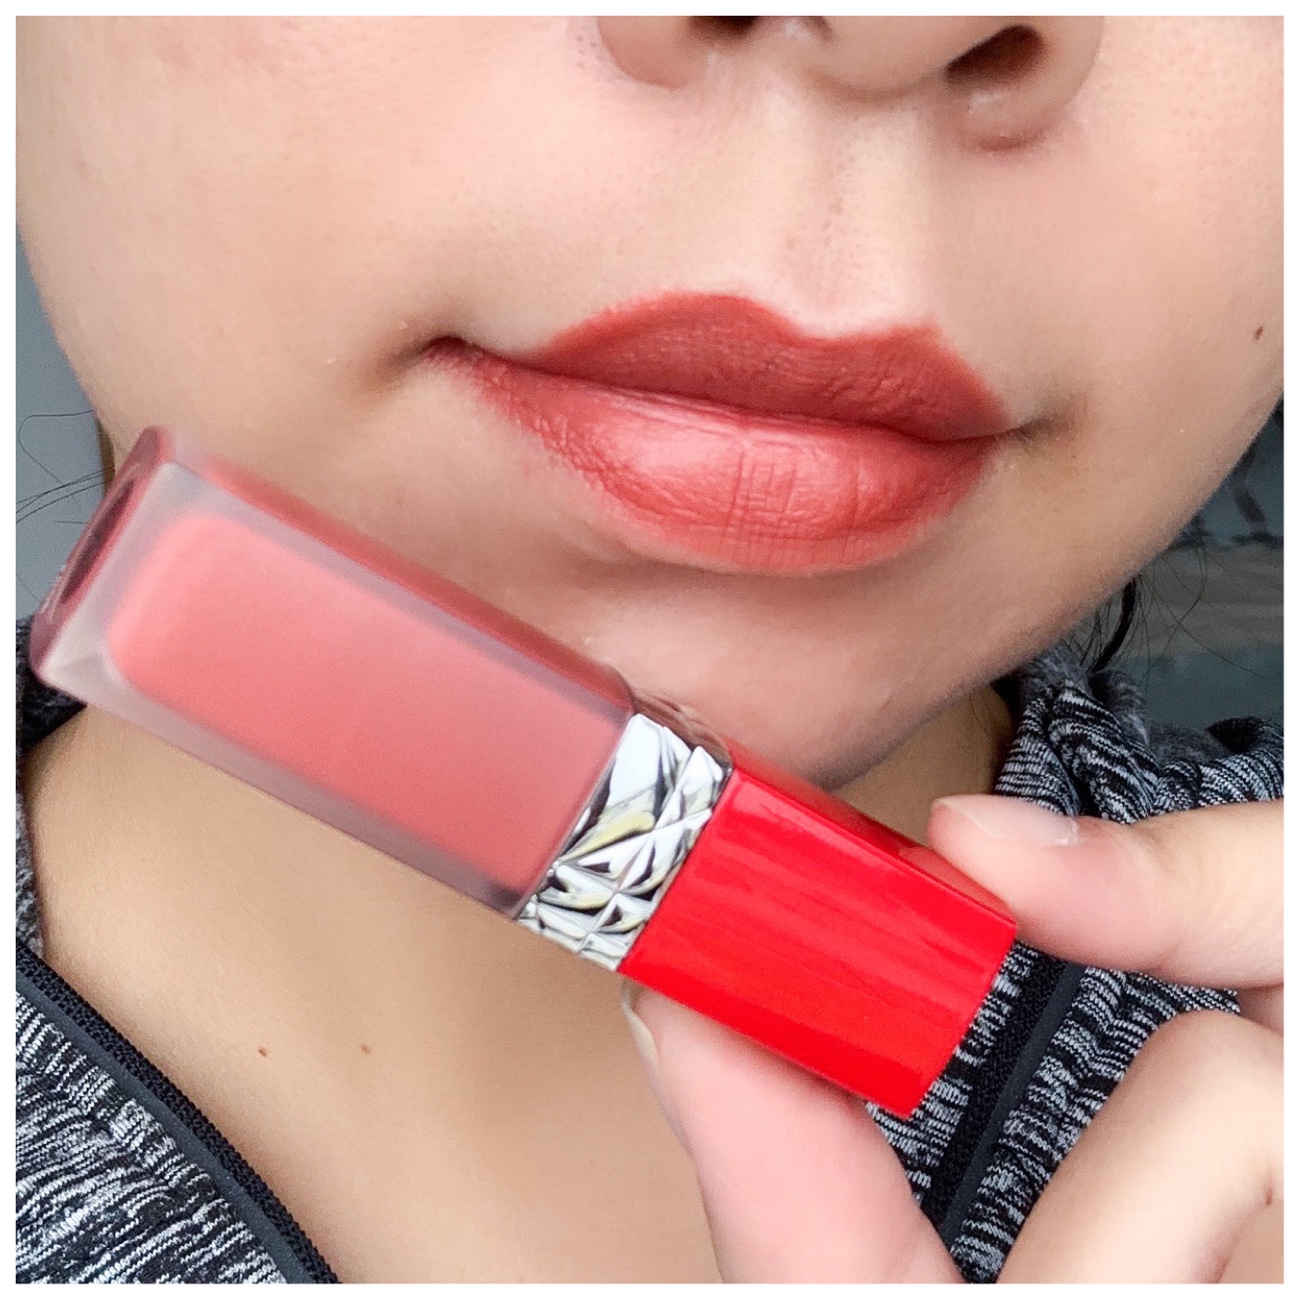 dior ultra care lipstick review